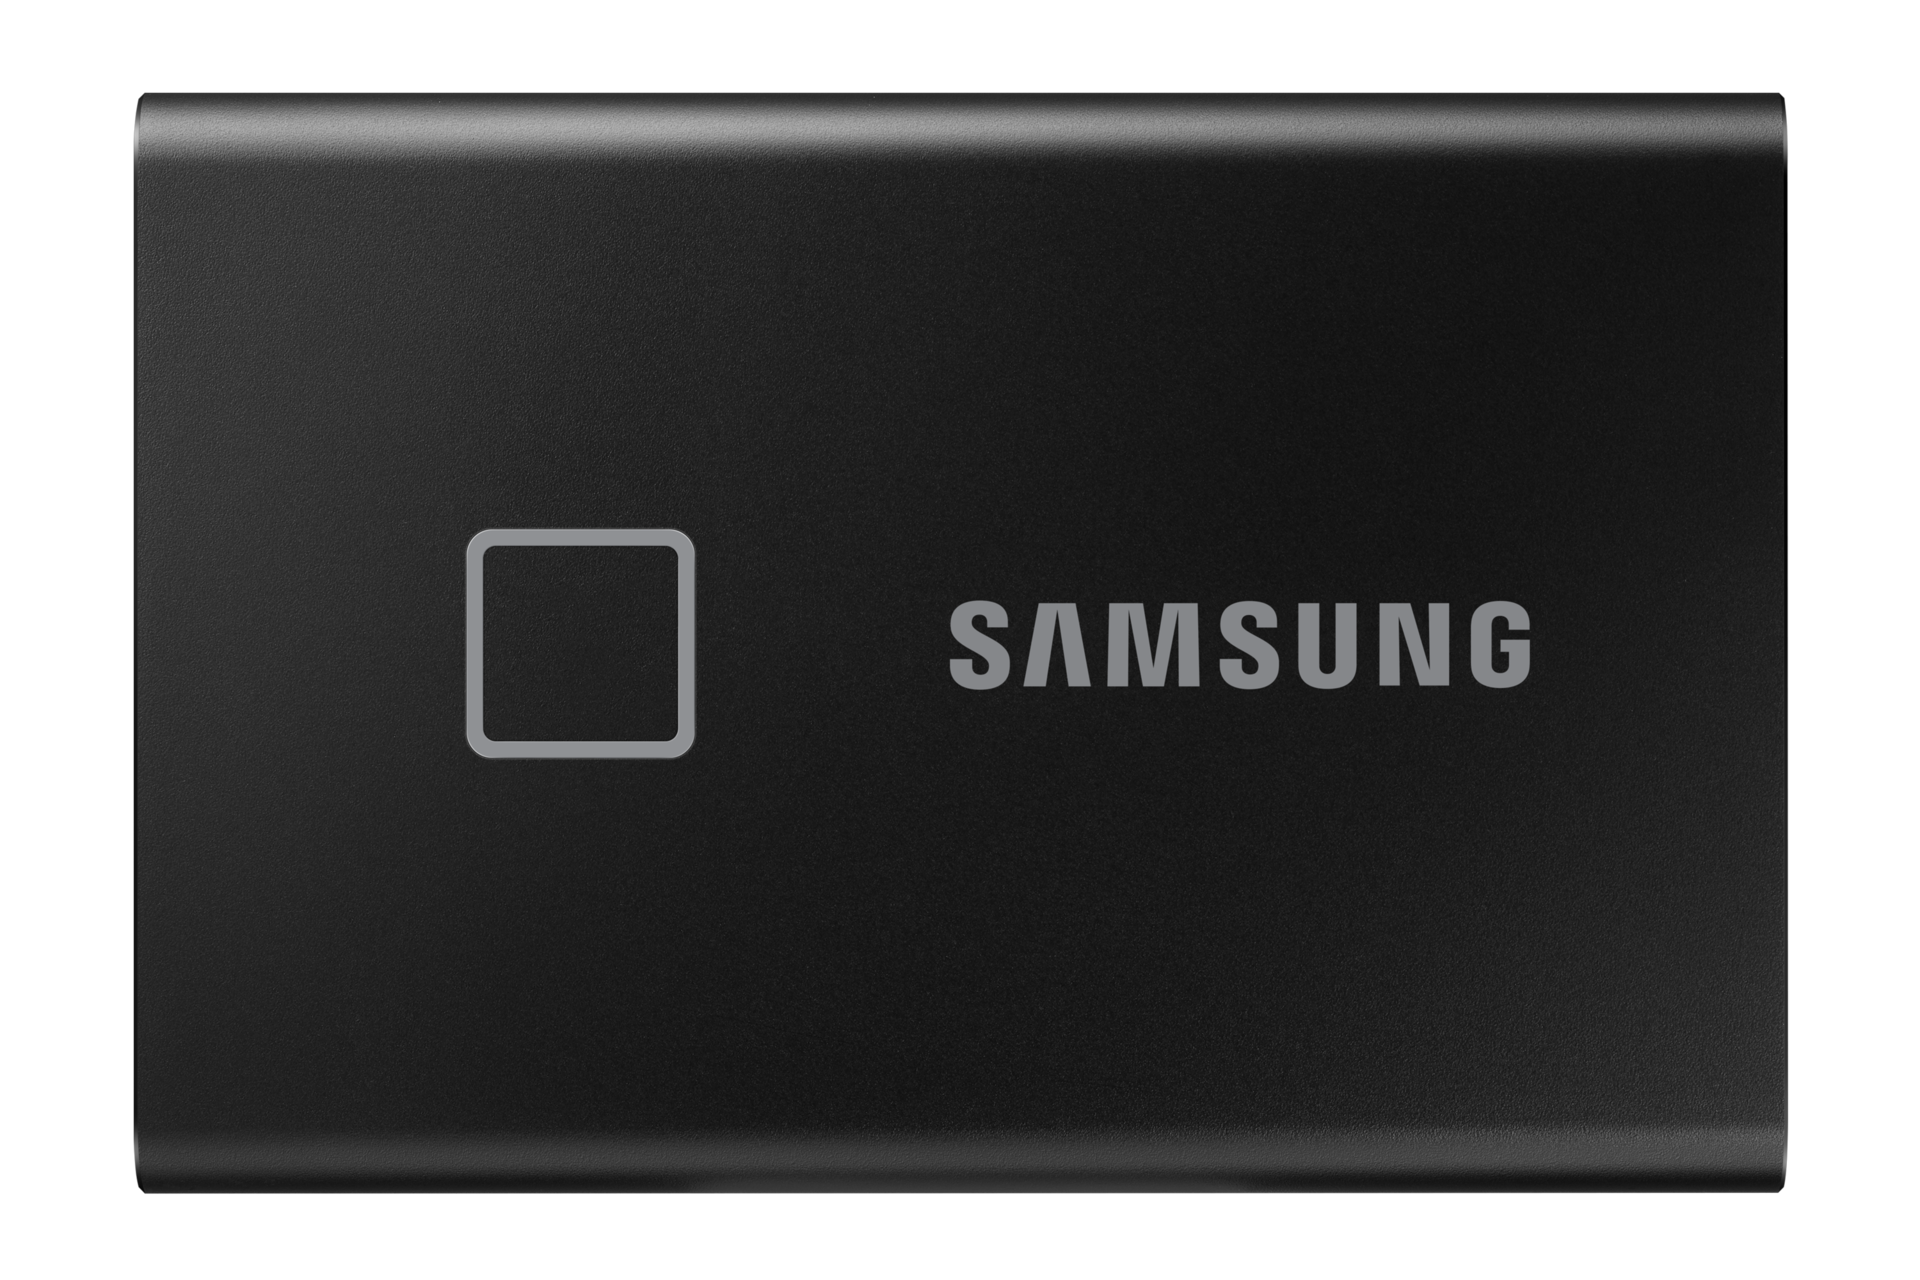 Samsung - T7 Rouge métallique - 2 To - USB 3.2 Gen 2 - SSD Externe